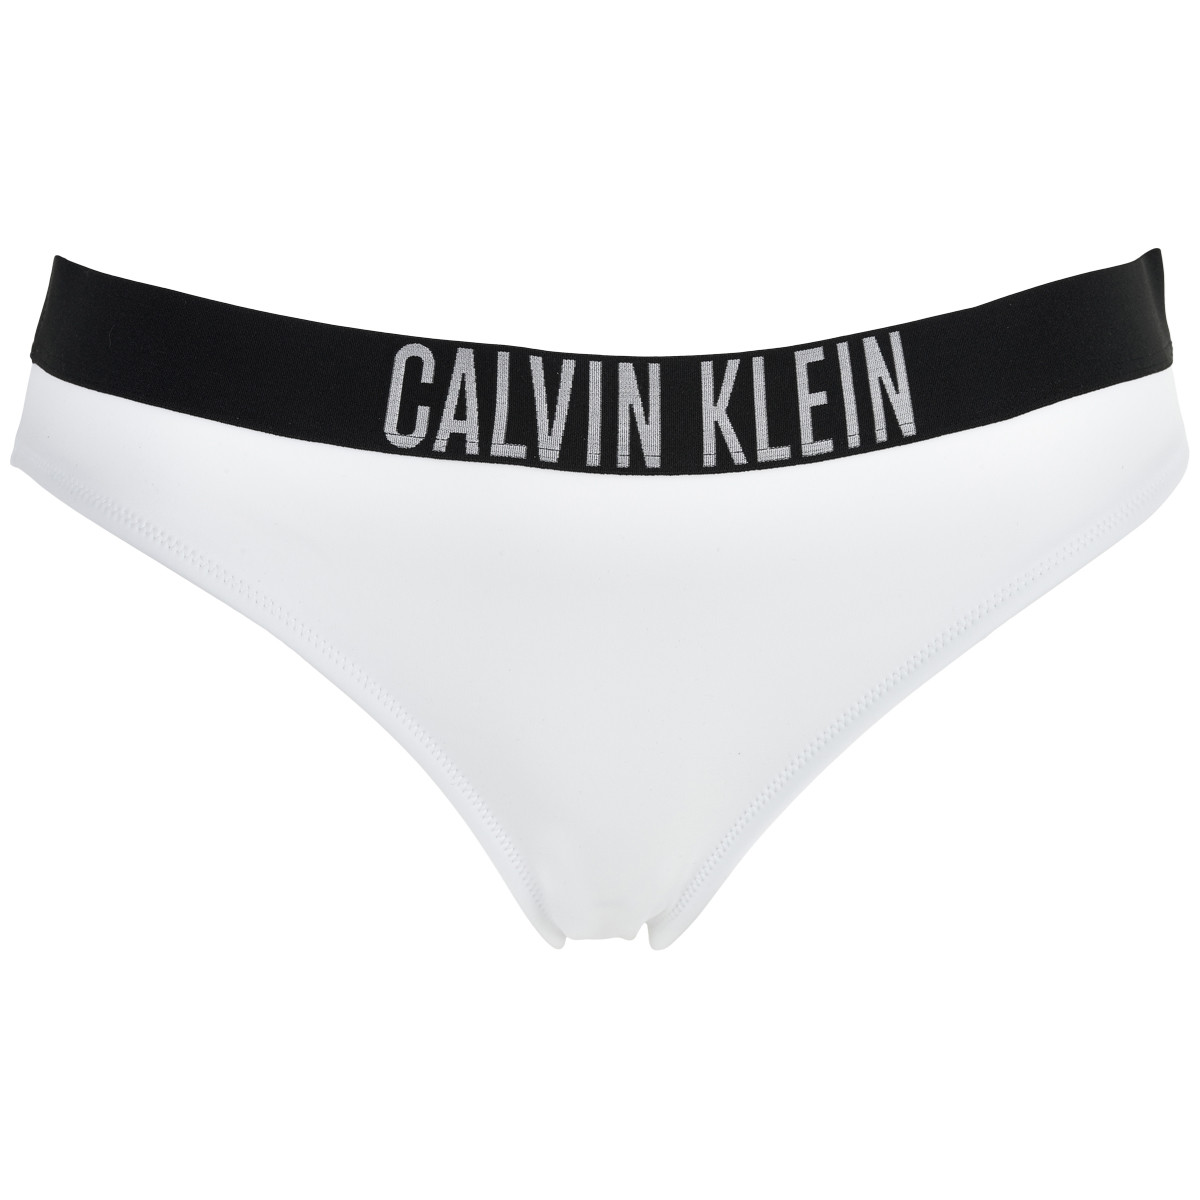 Calvin Klein Bikini Tai 1859 Ycd Classi, Størrelse: S, Farve: Classi, Dame  